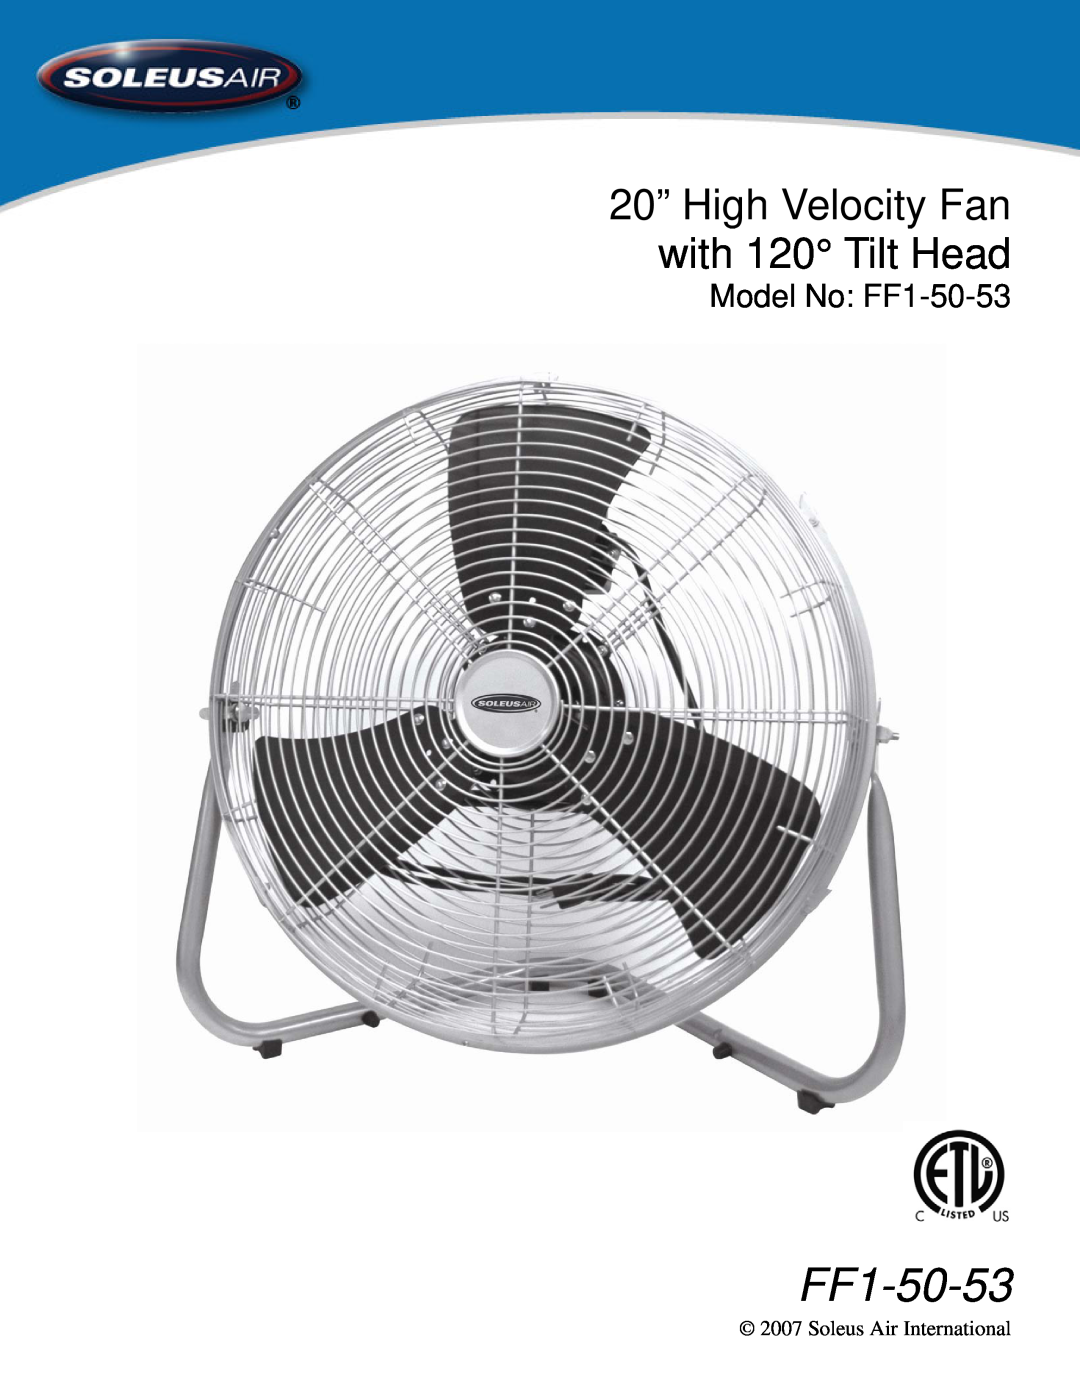 Soleus Air manual 20” High Velocity Fan with 120 Tilt Head, Model No FF1-50-53 